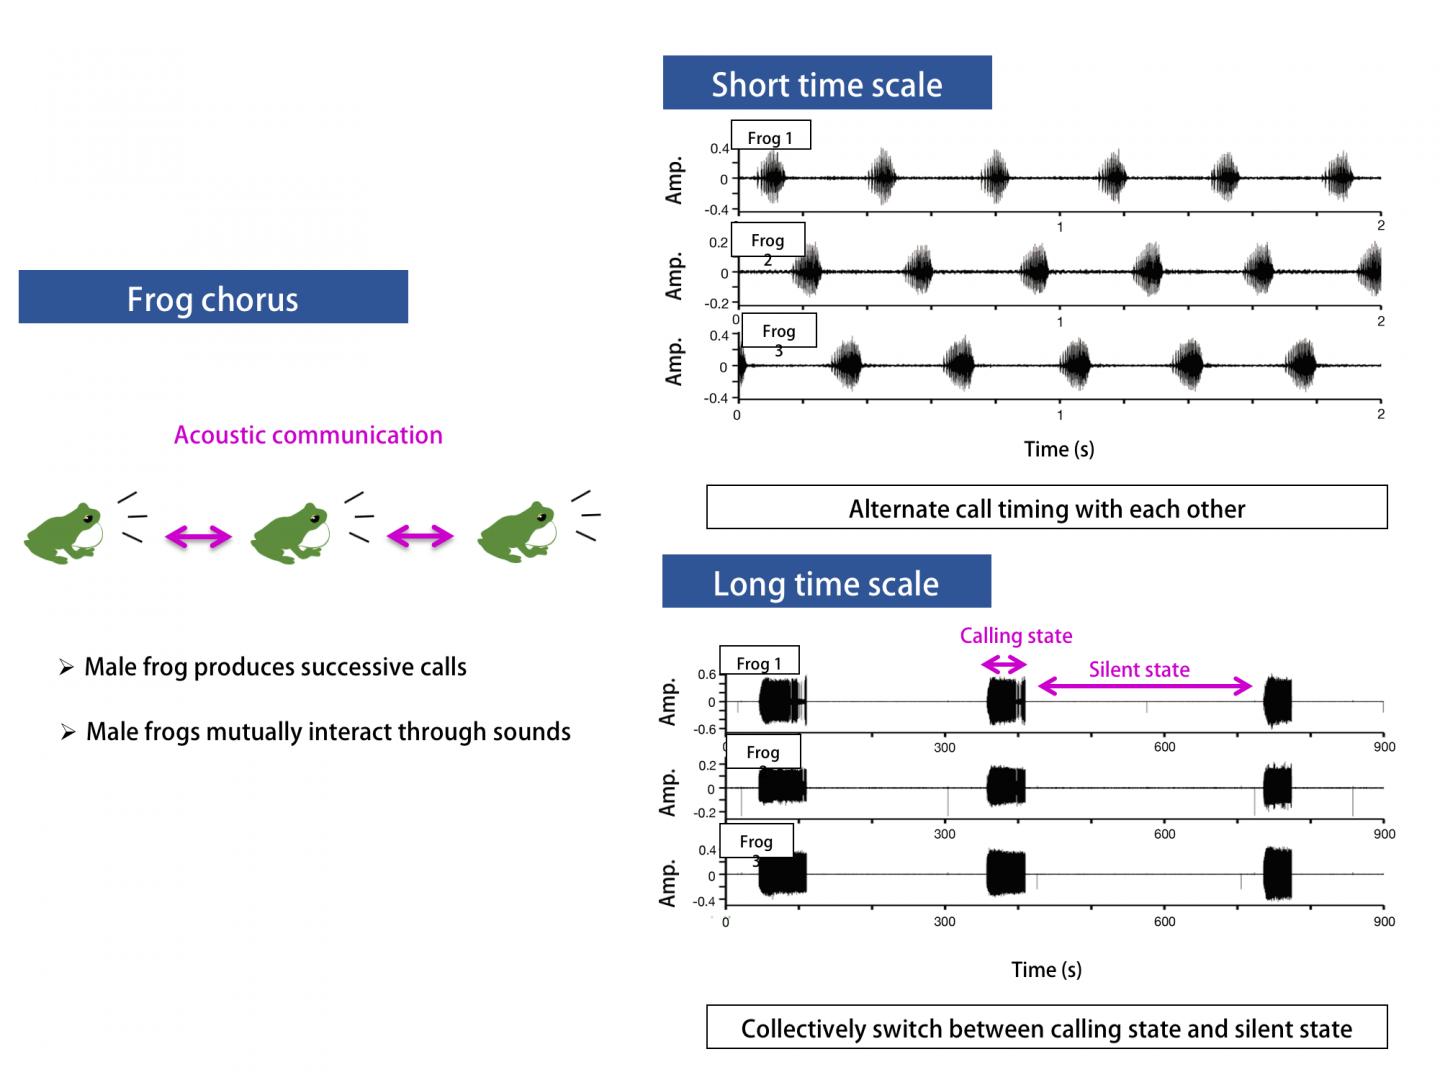 Figure 3. Empirical Data on a Frog Chorus